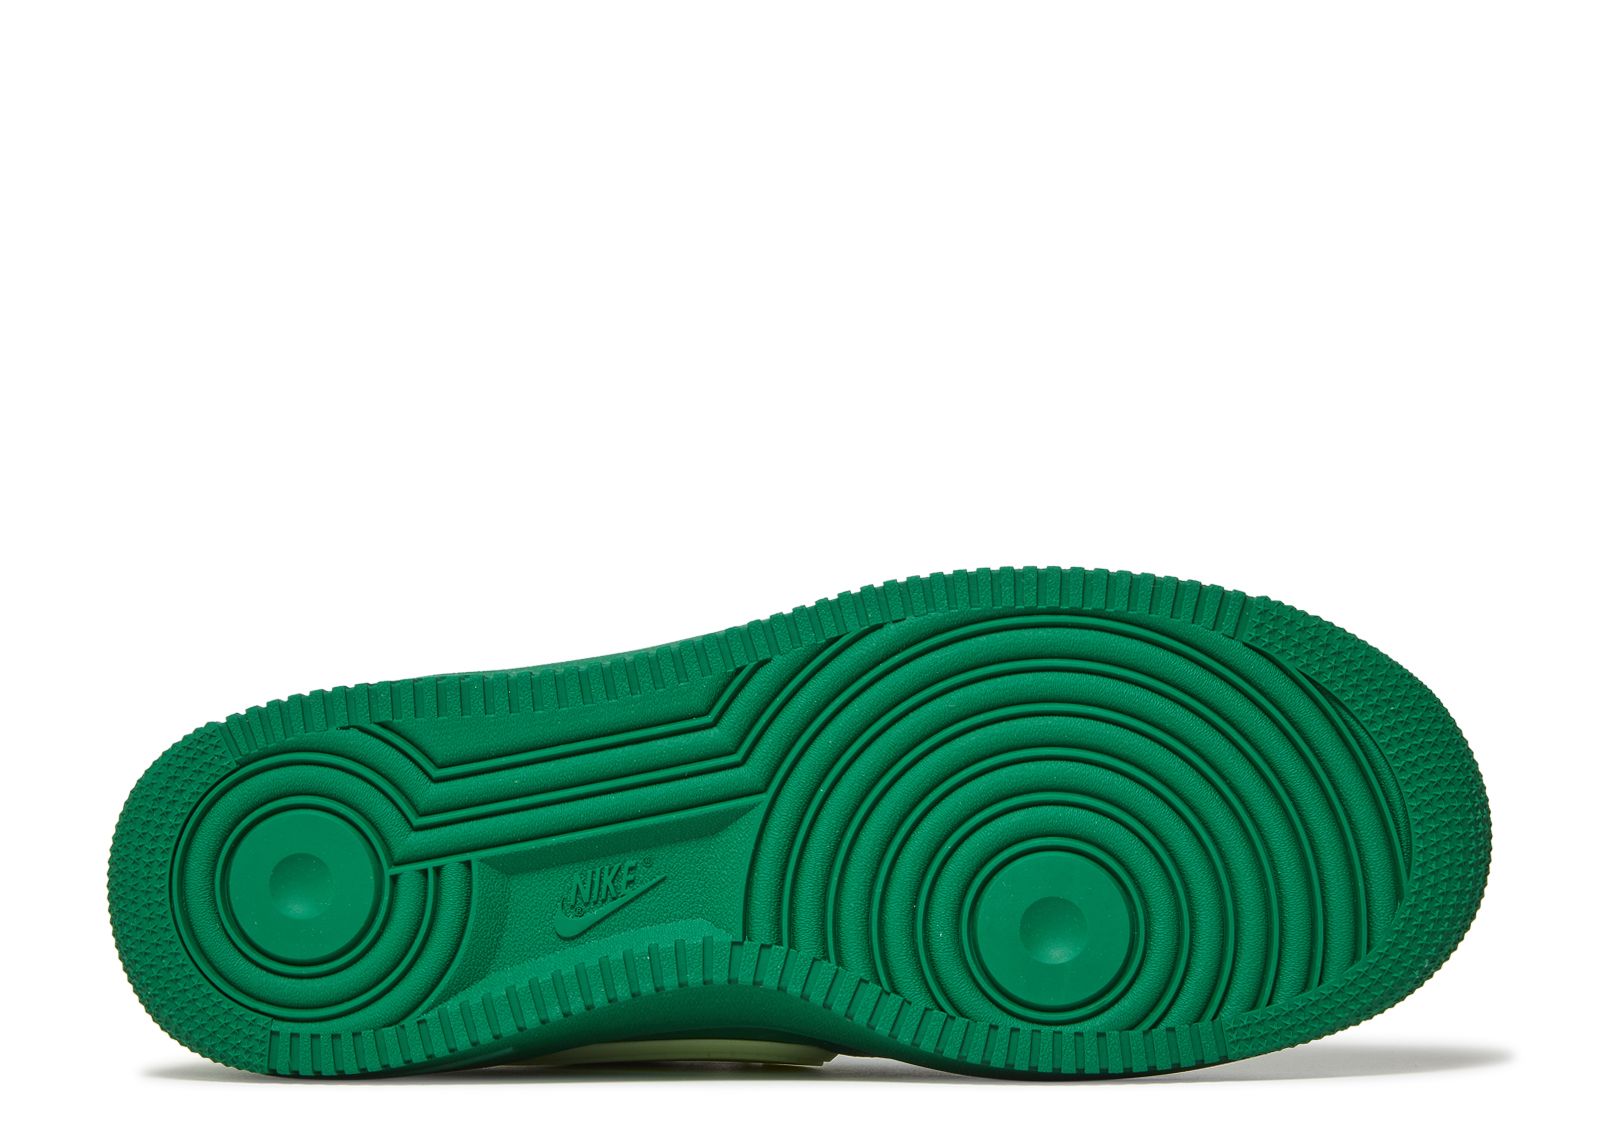 AMBUSH x Nike Air Force 1 Low Pine Green Drops December 16th - Sneaker News